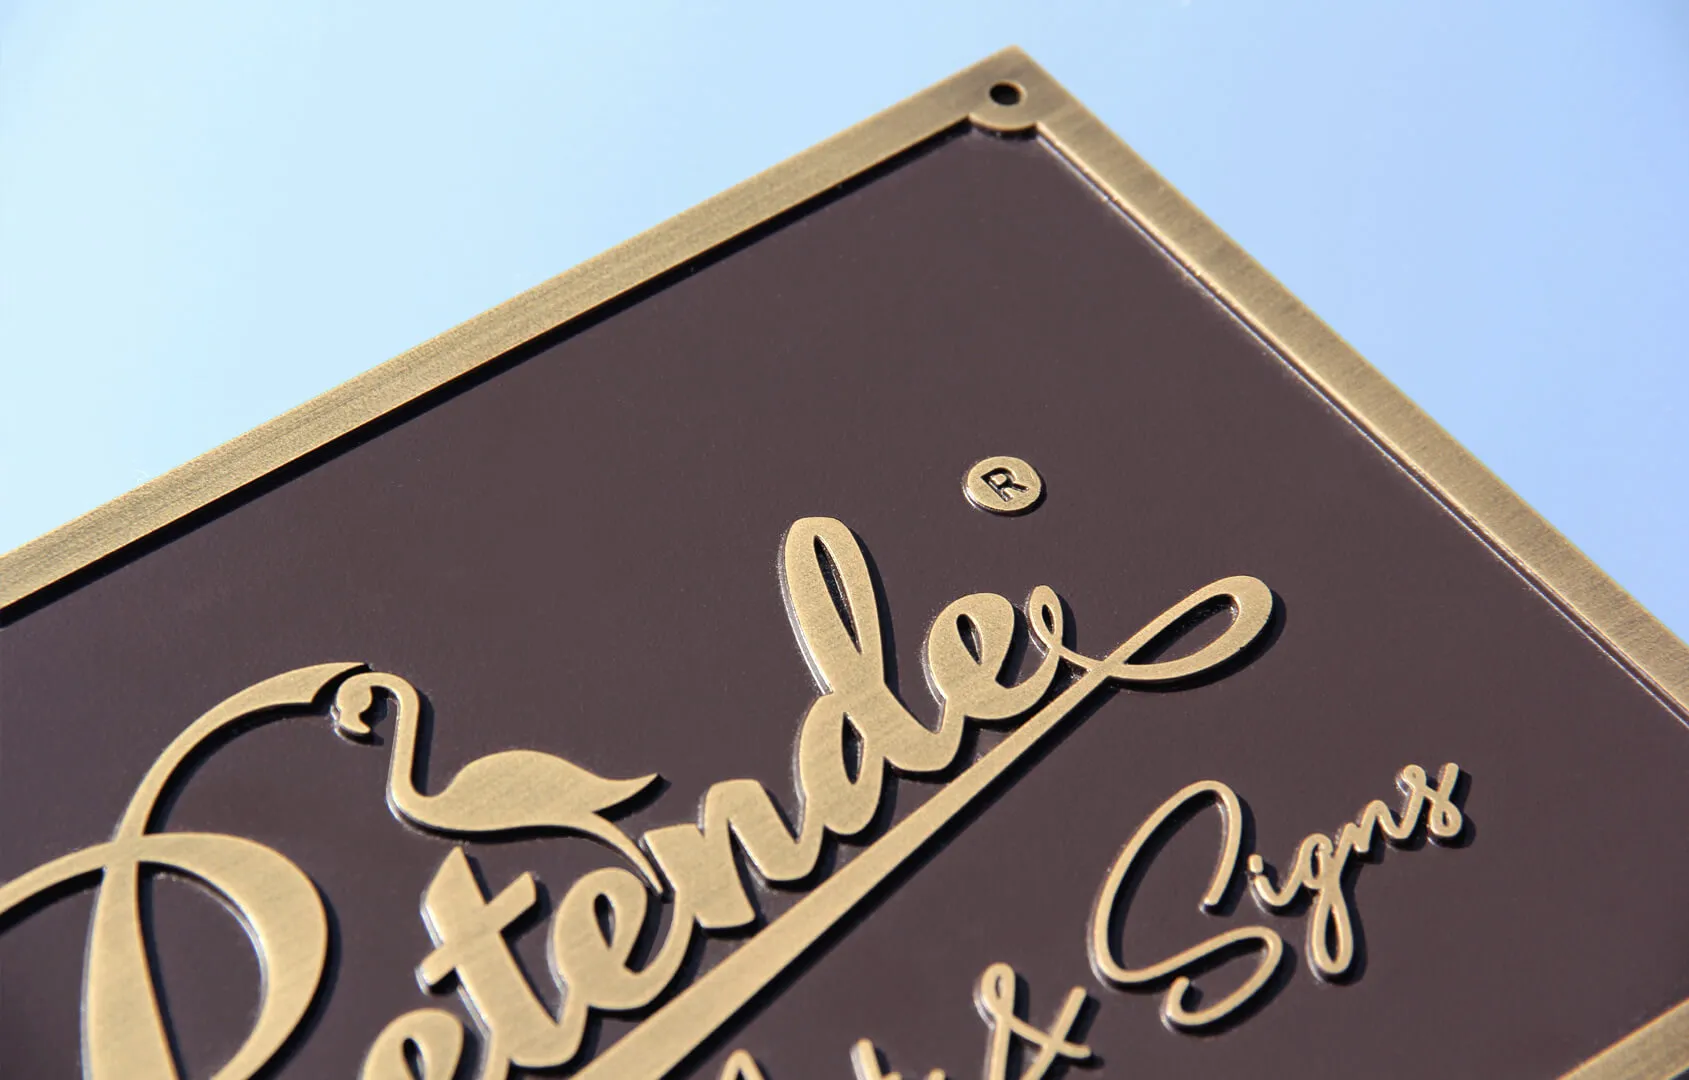 3D cast bronze plaque with Pretende logo